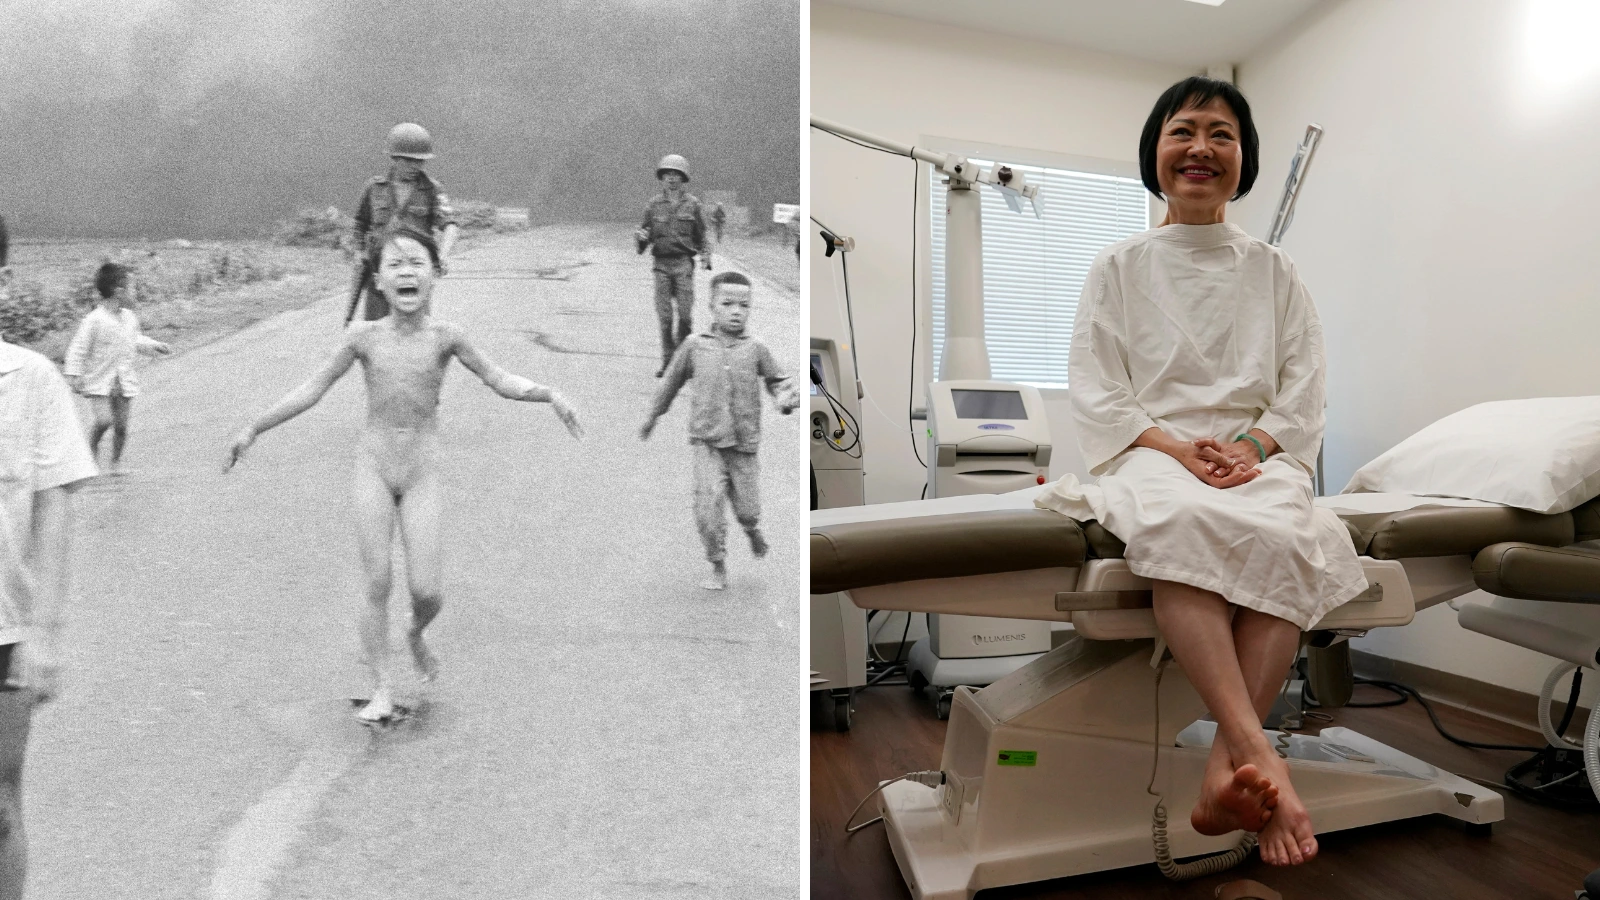 Phan Thi Kim Phuc receiving final skin treatment 50 years after war defining photo